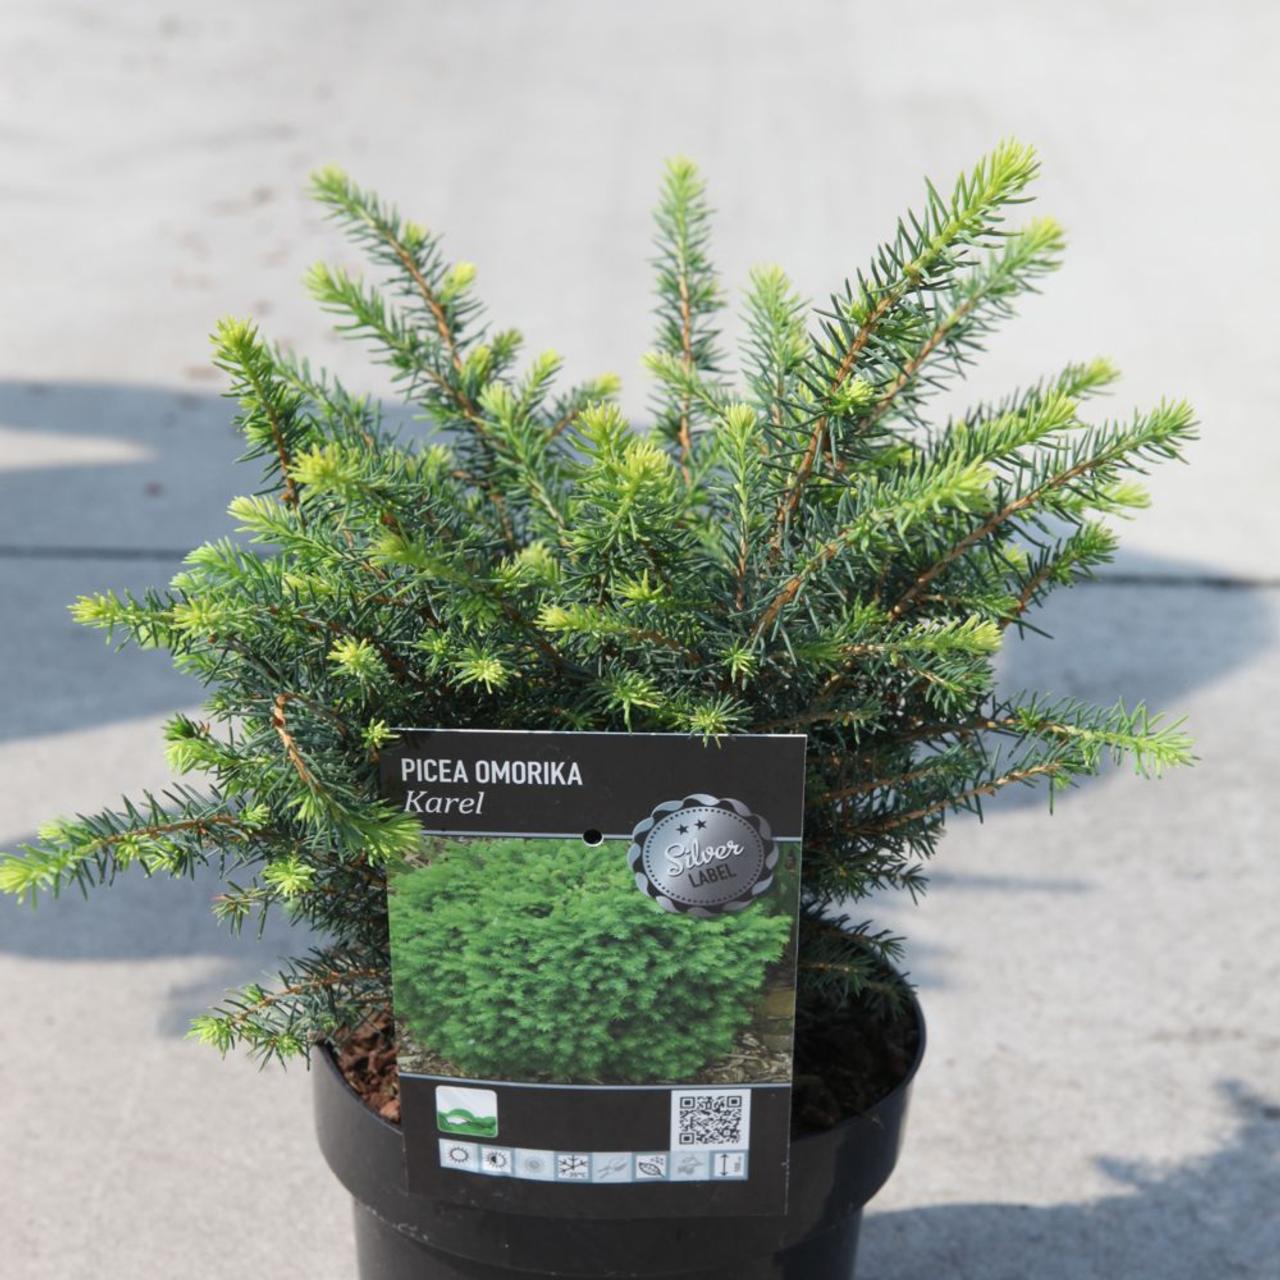 Picea omorika 'Karel' plant